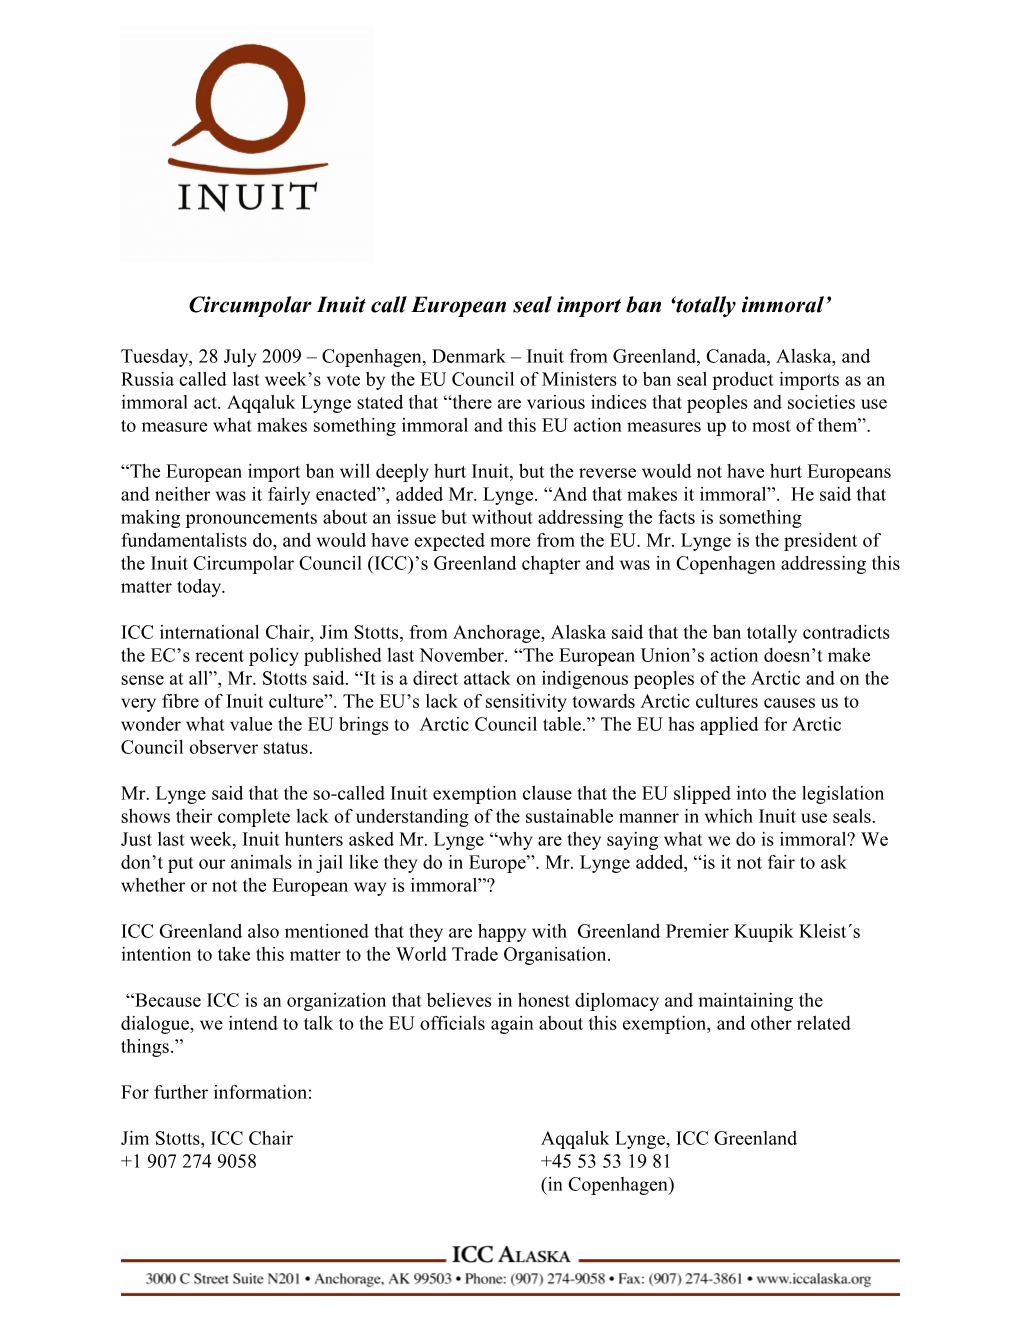 Circumpolar Inuit Call European Seal Import Ban Totally Immoral